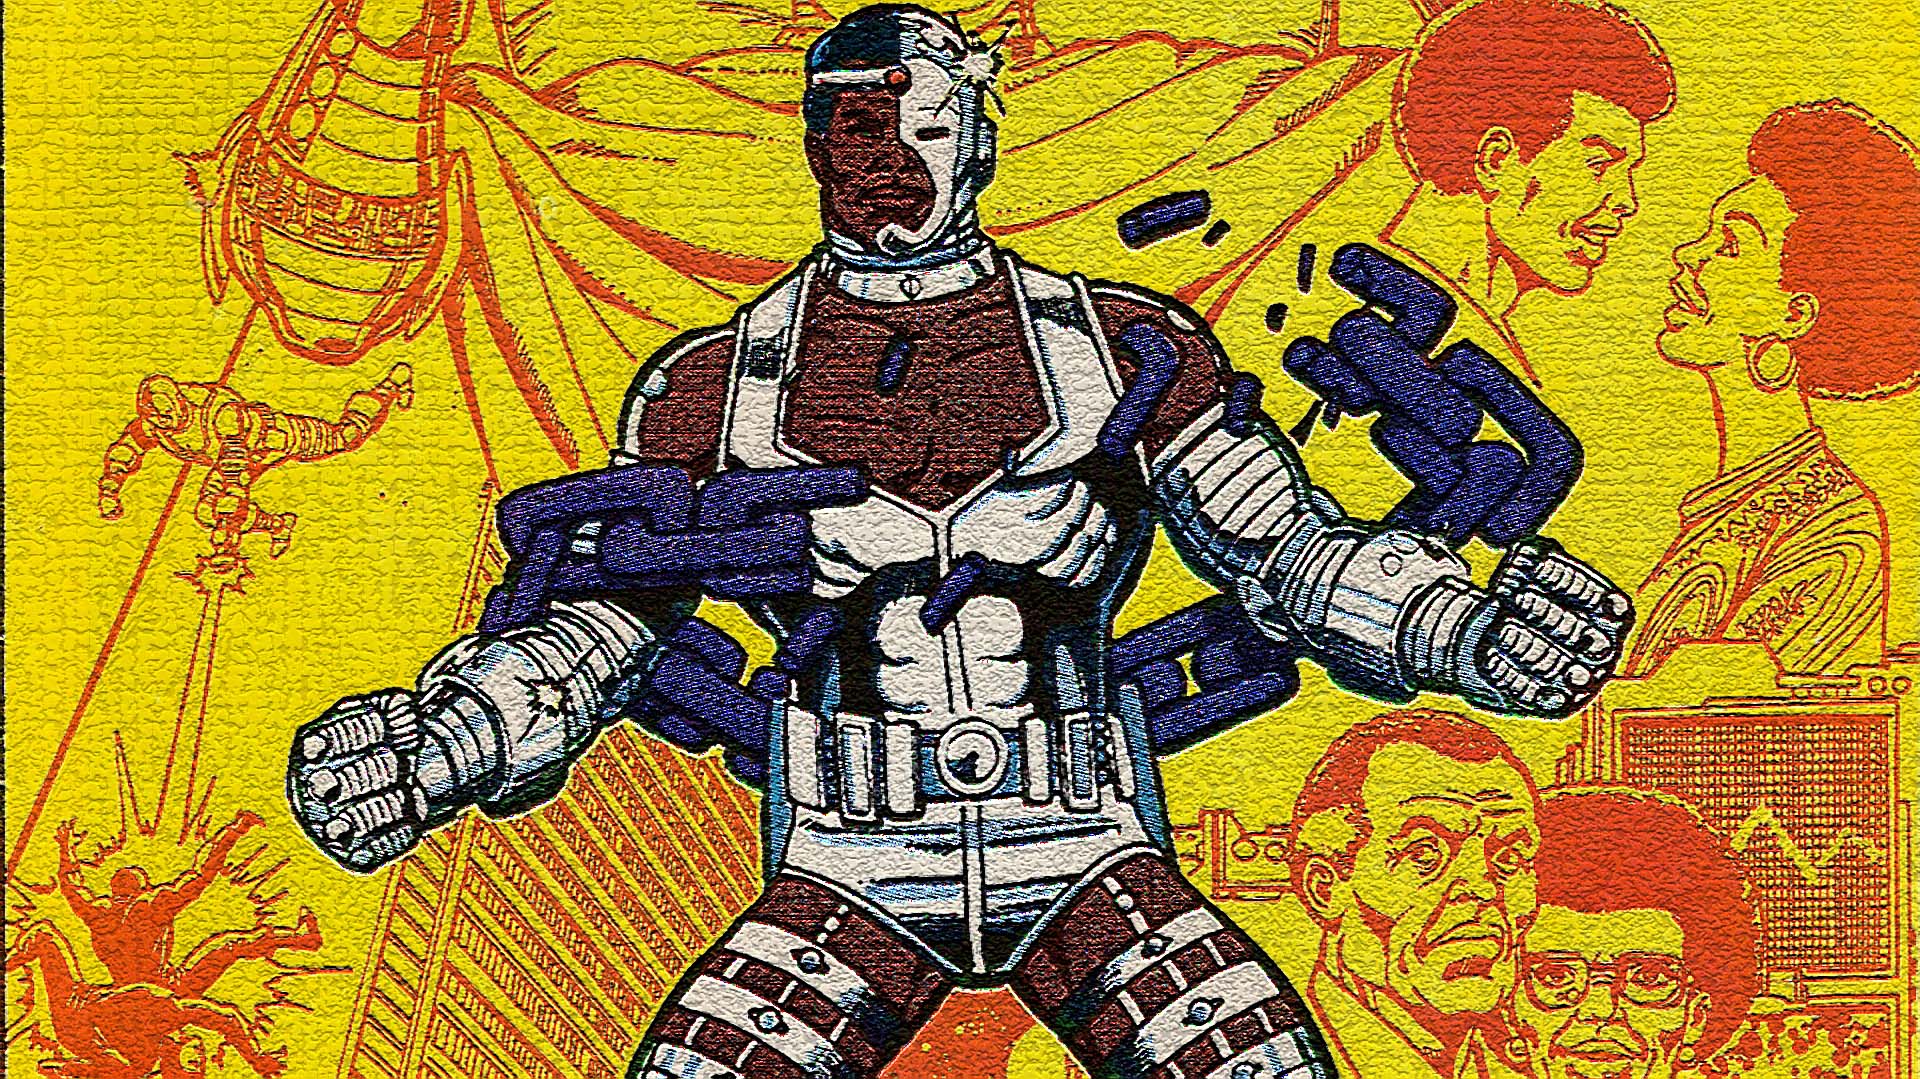 Victor Stone Cyborg DC Comics 1920x1079